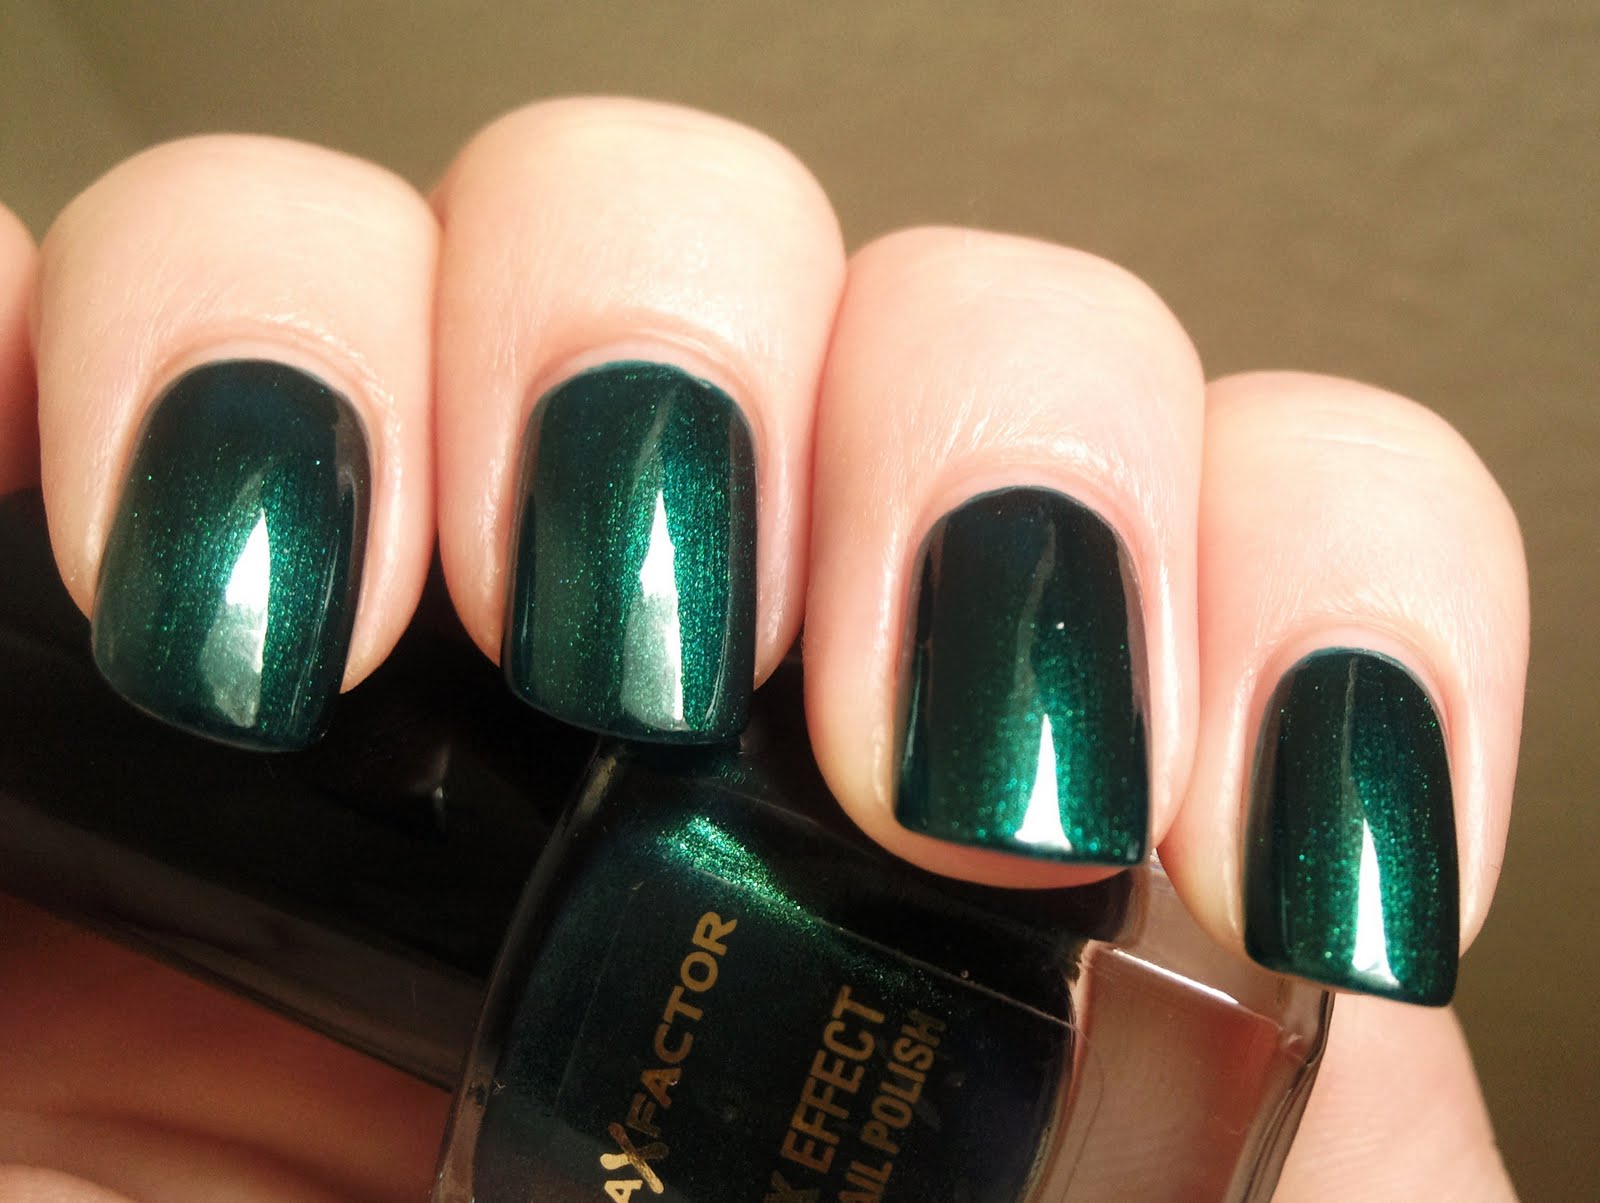 3. Emerald green nail polish - wide 5